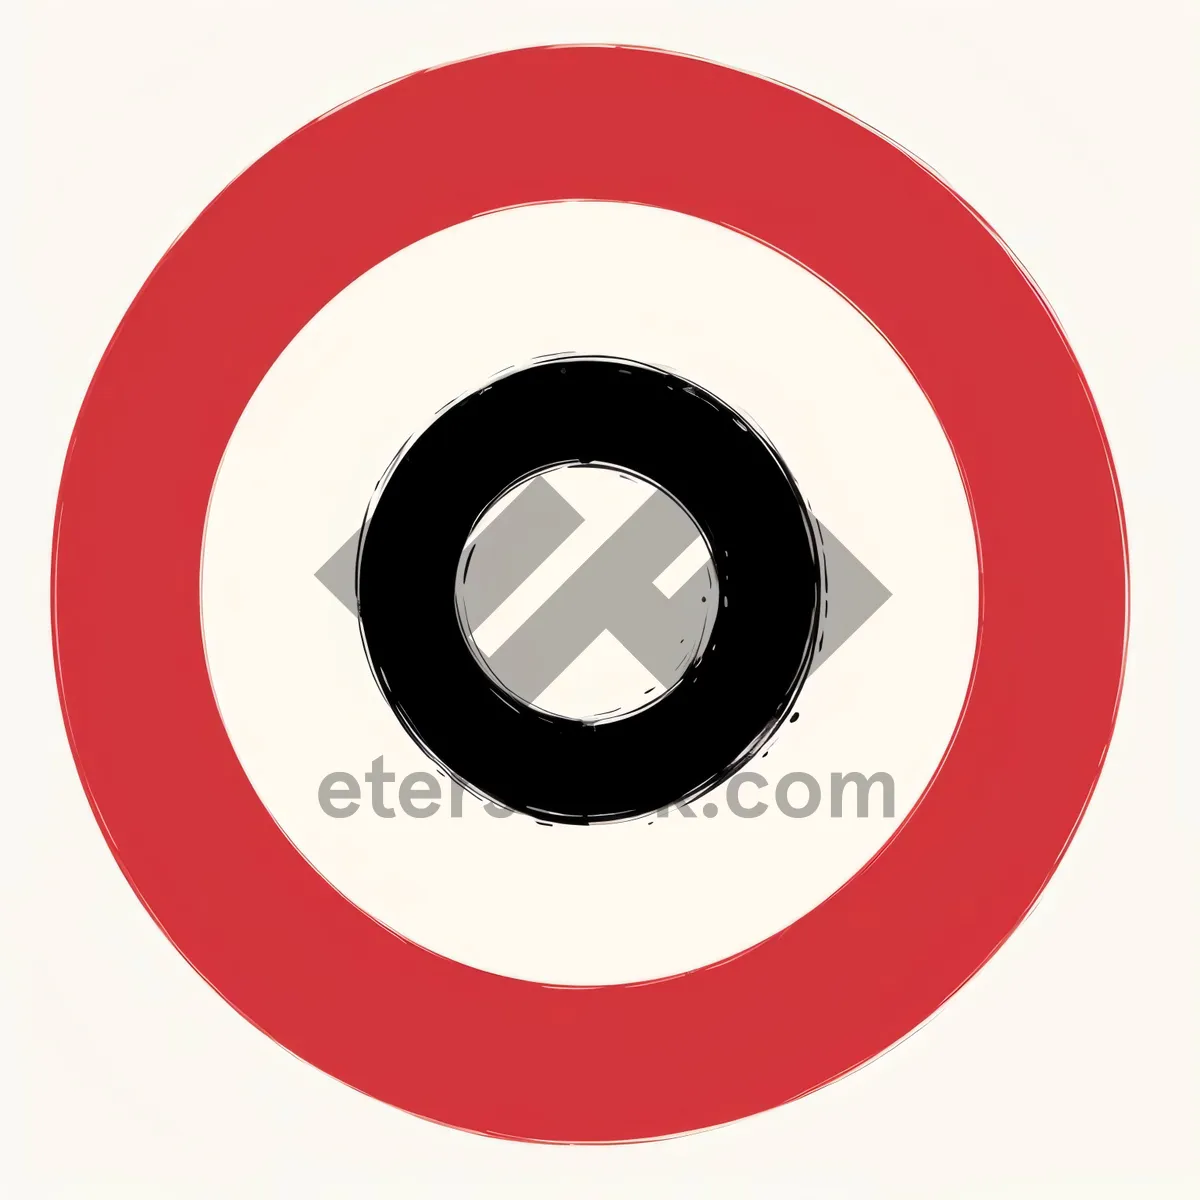 Picture of Web 3D Circular Button Icon - Glossy Design